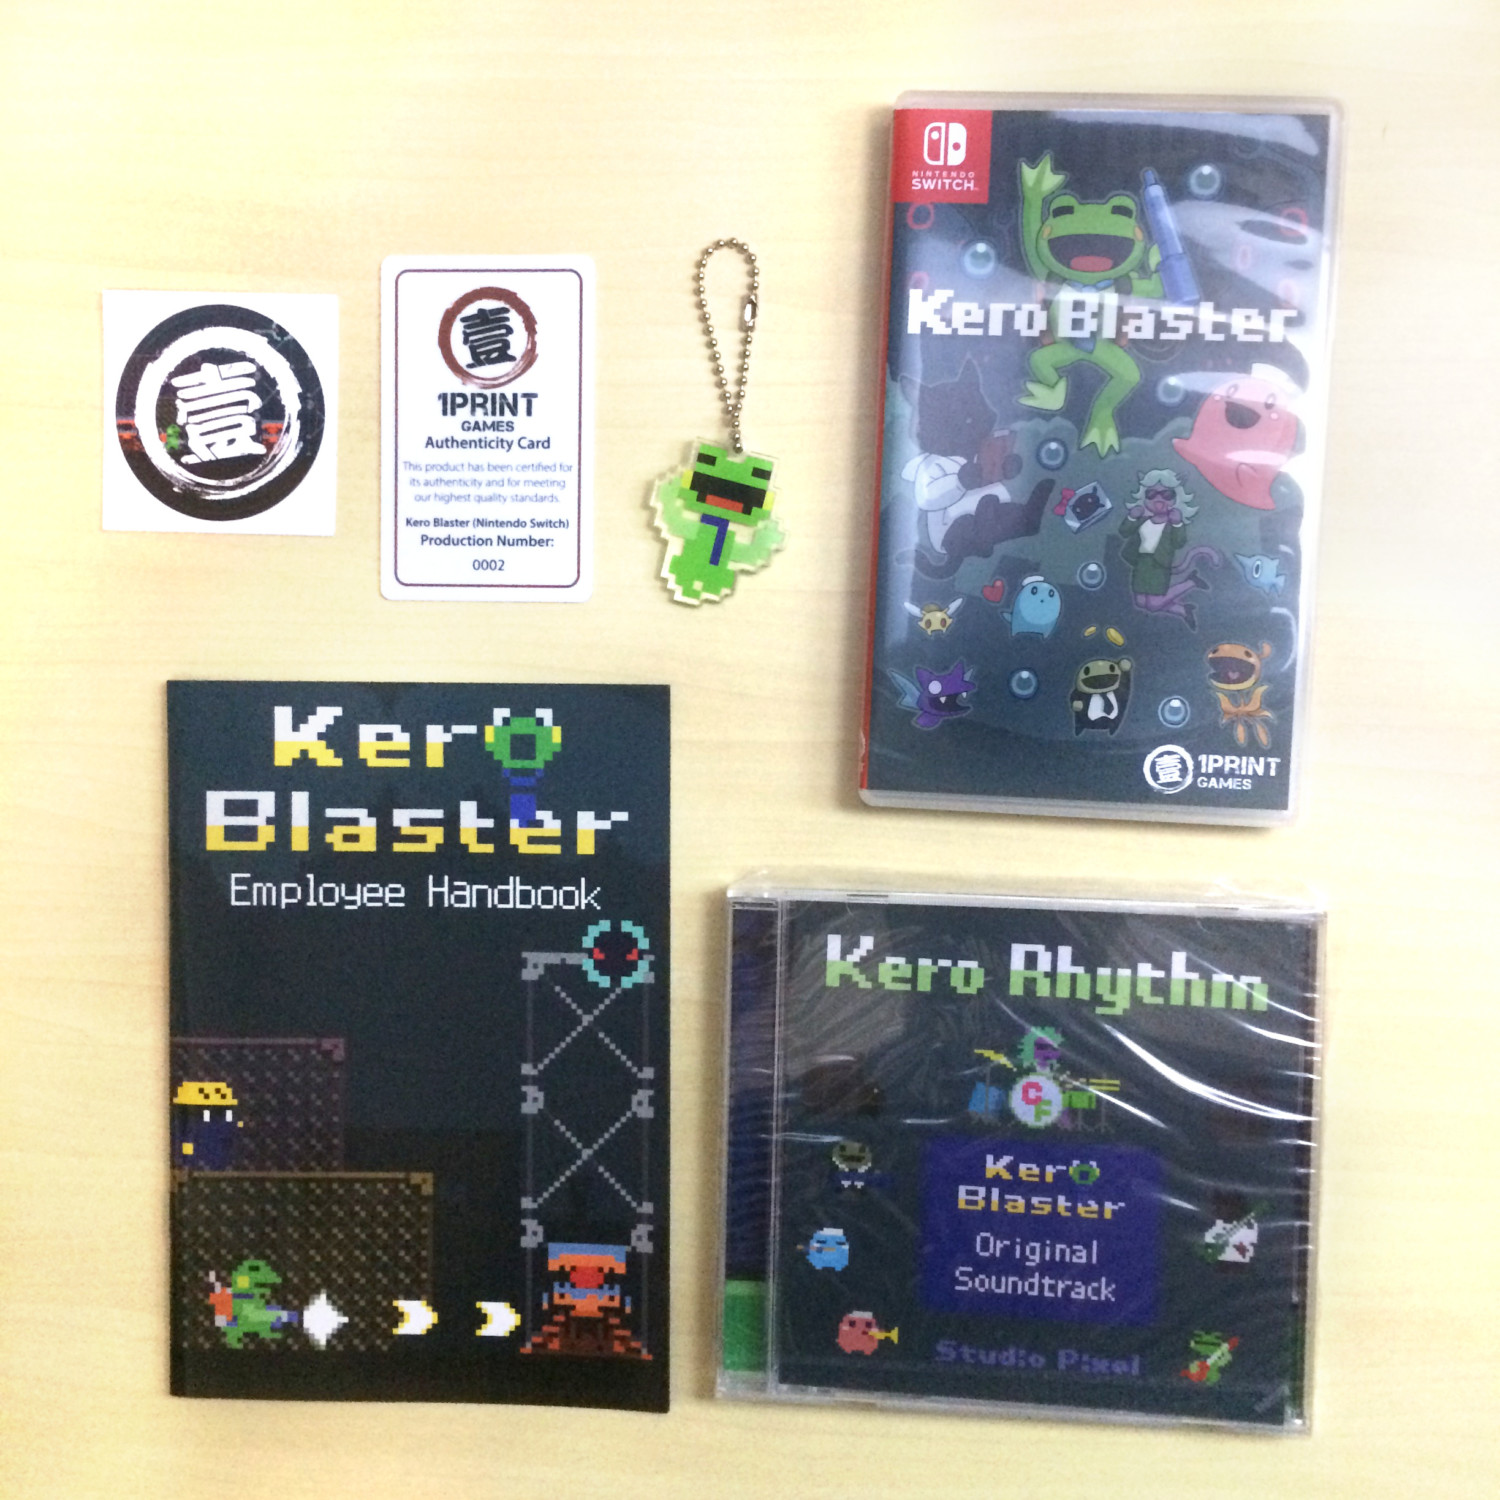 Kero Blaster Limited Edition Clocks In On Nintendo Switch™️ - Leoful